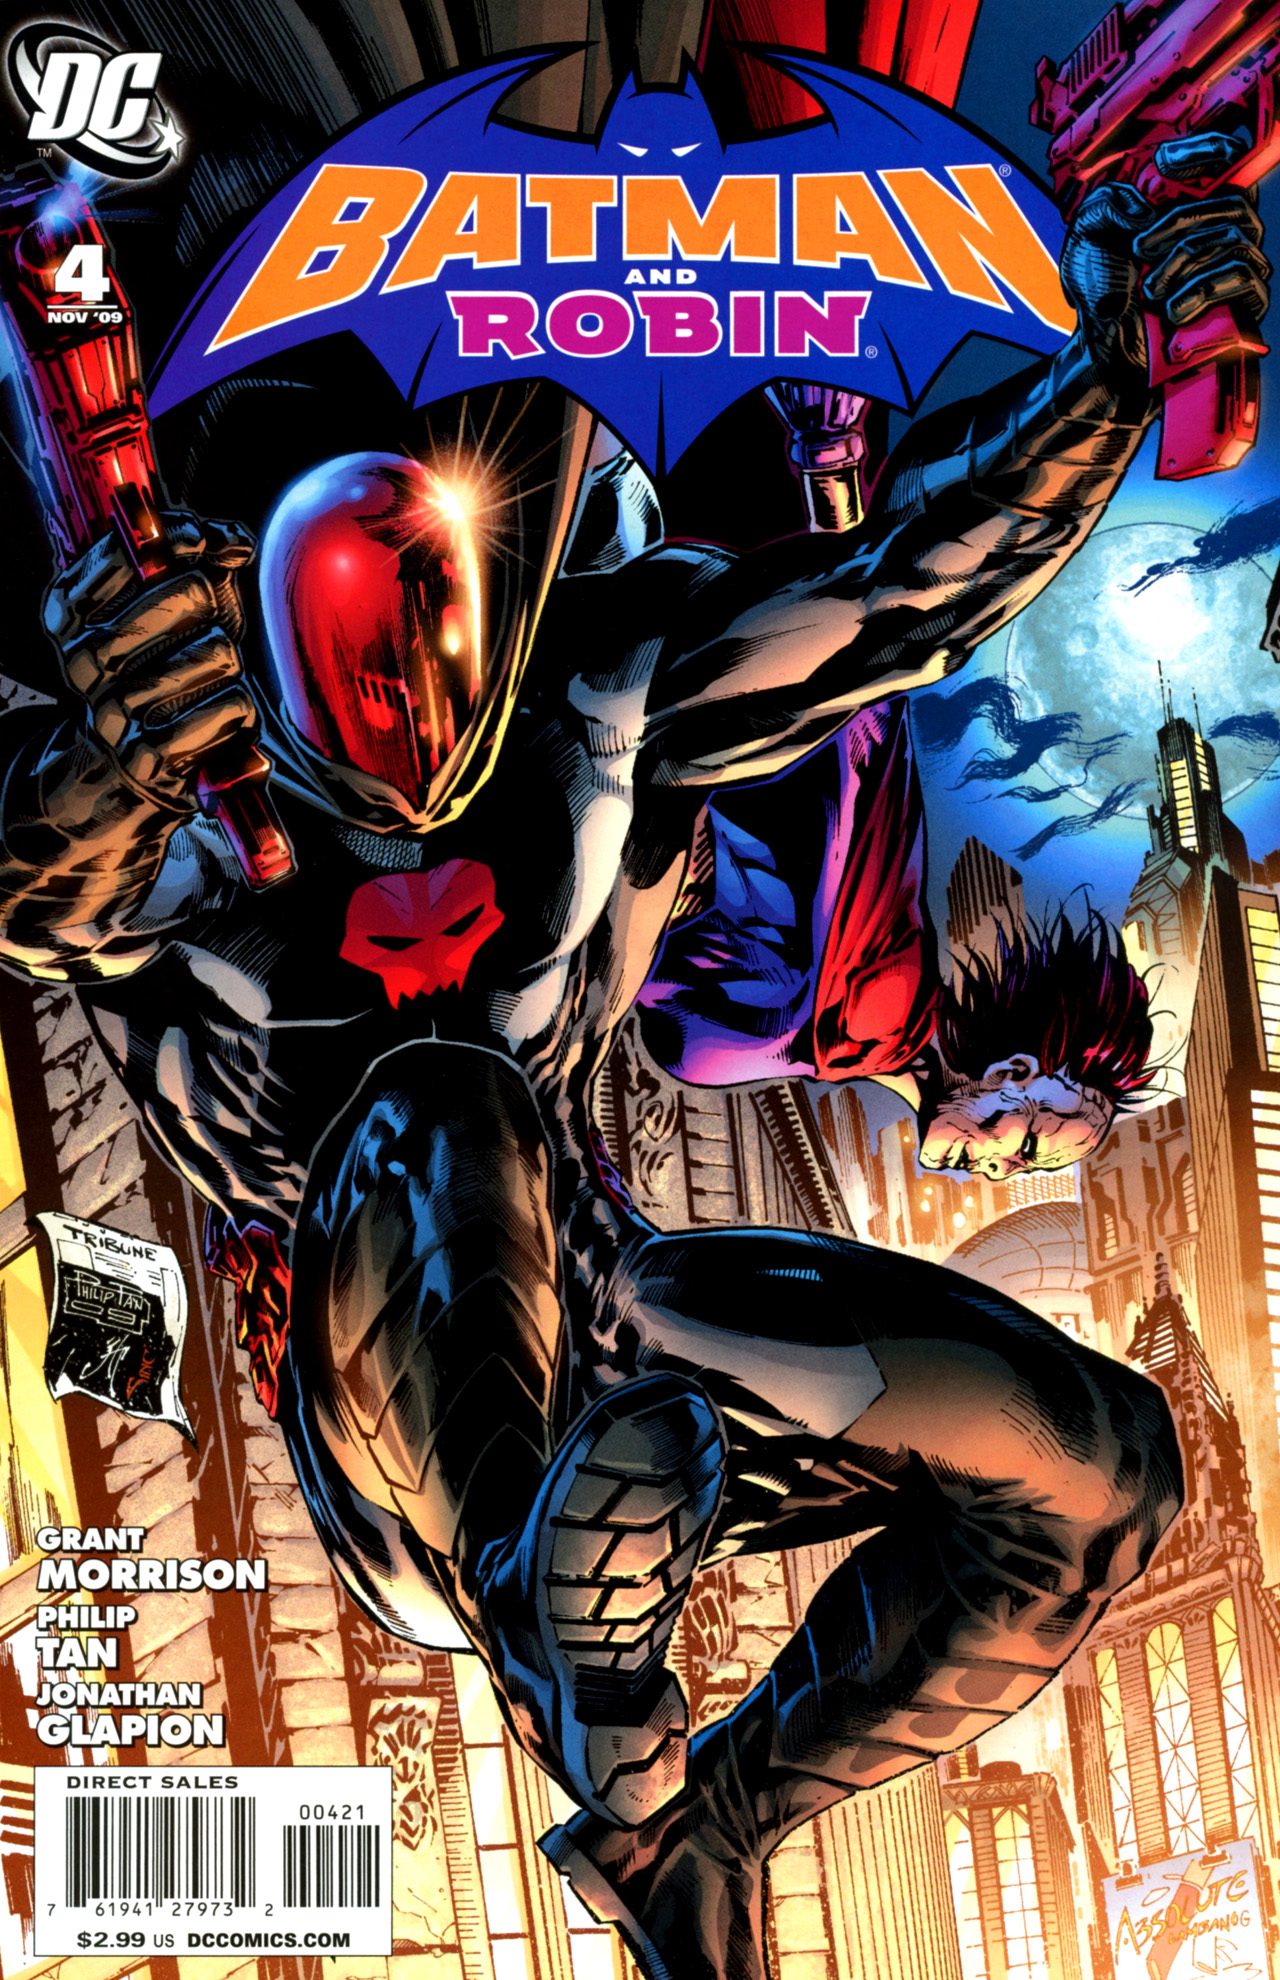 Batman and Robin Vol 1 4 | DC Database | Fandom